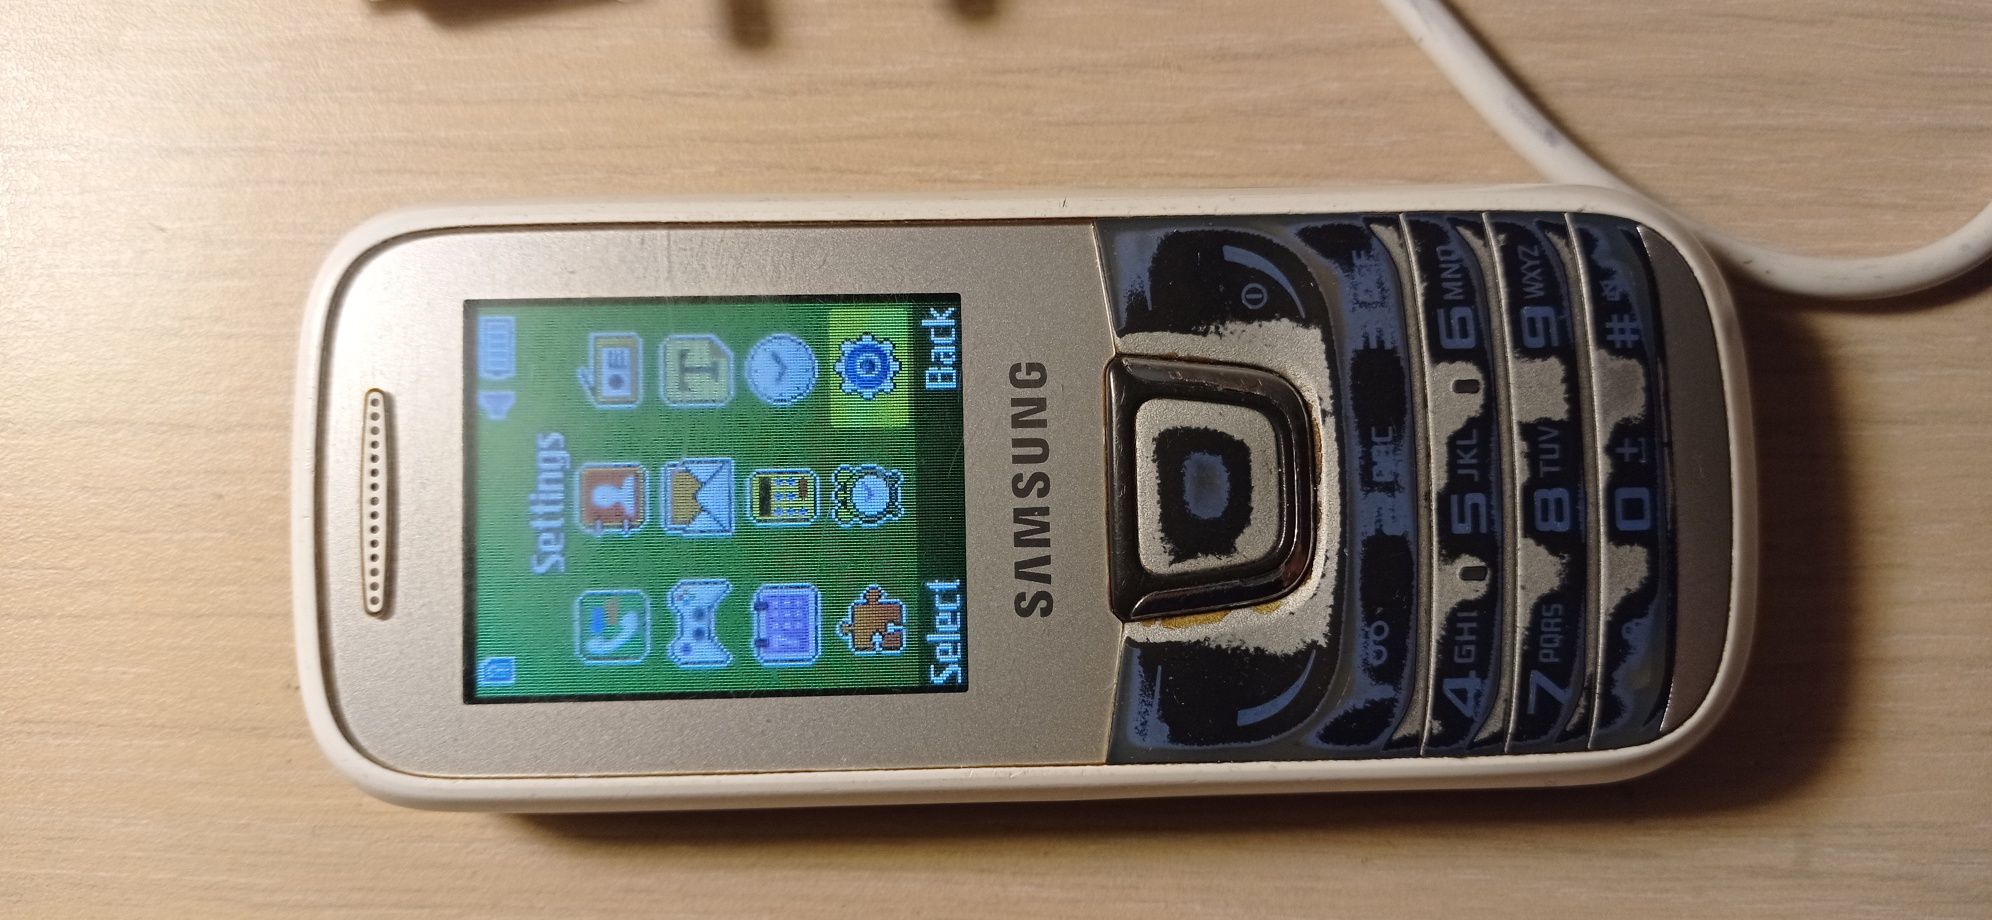 Telefon Samsung cu butoane model GT-E1280